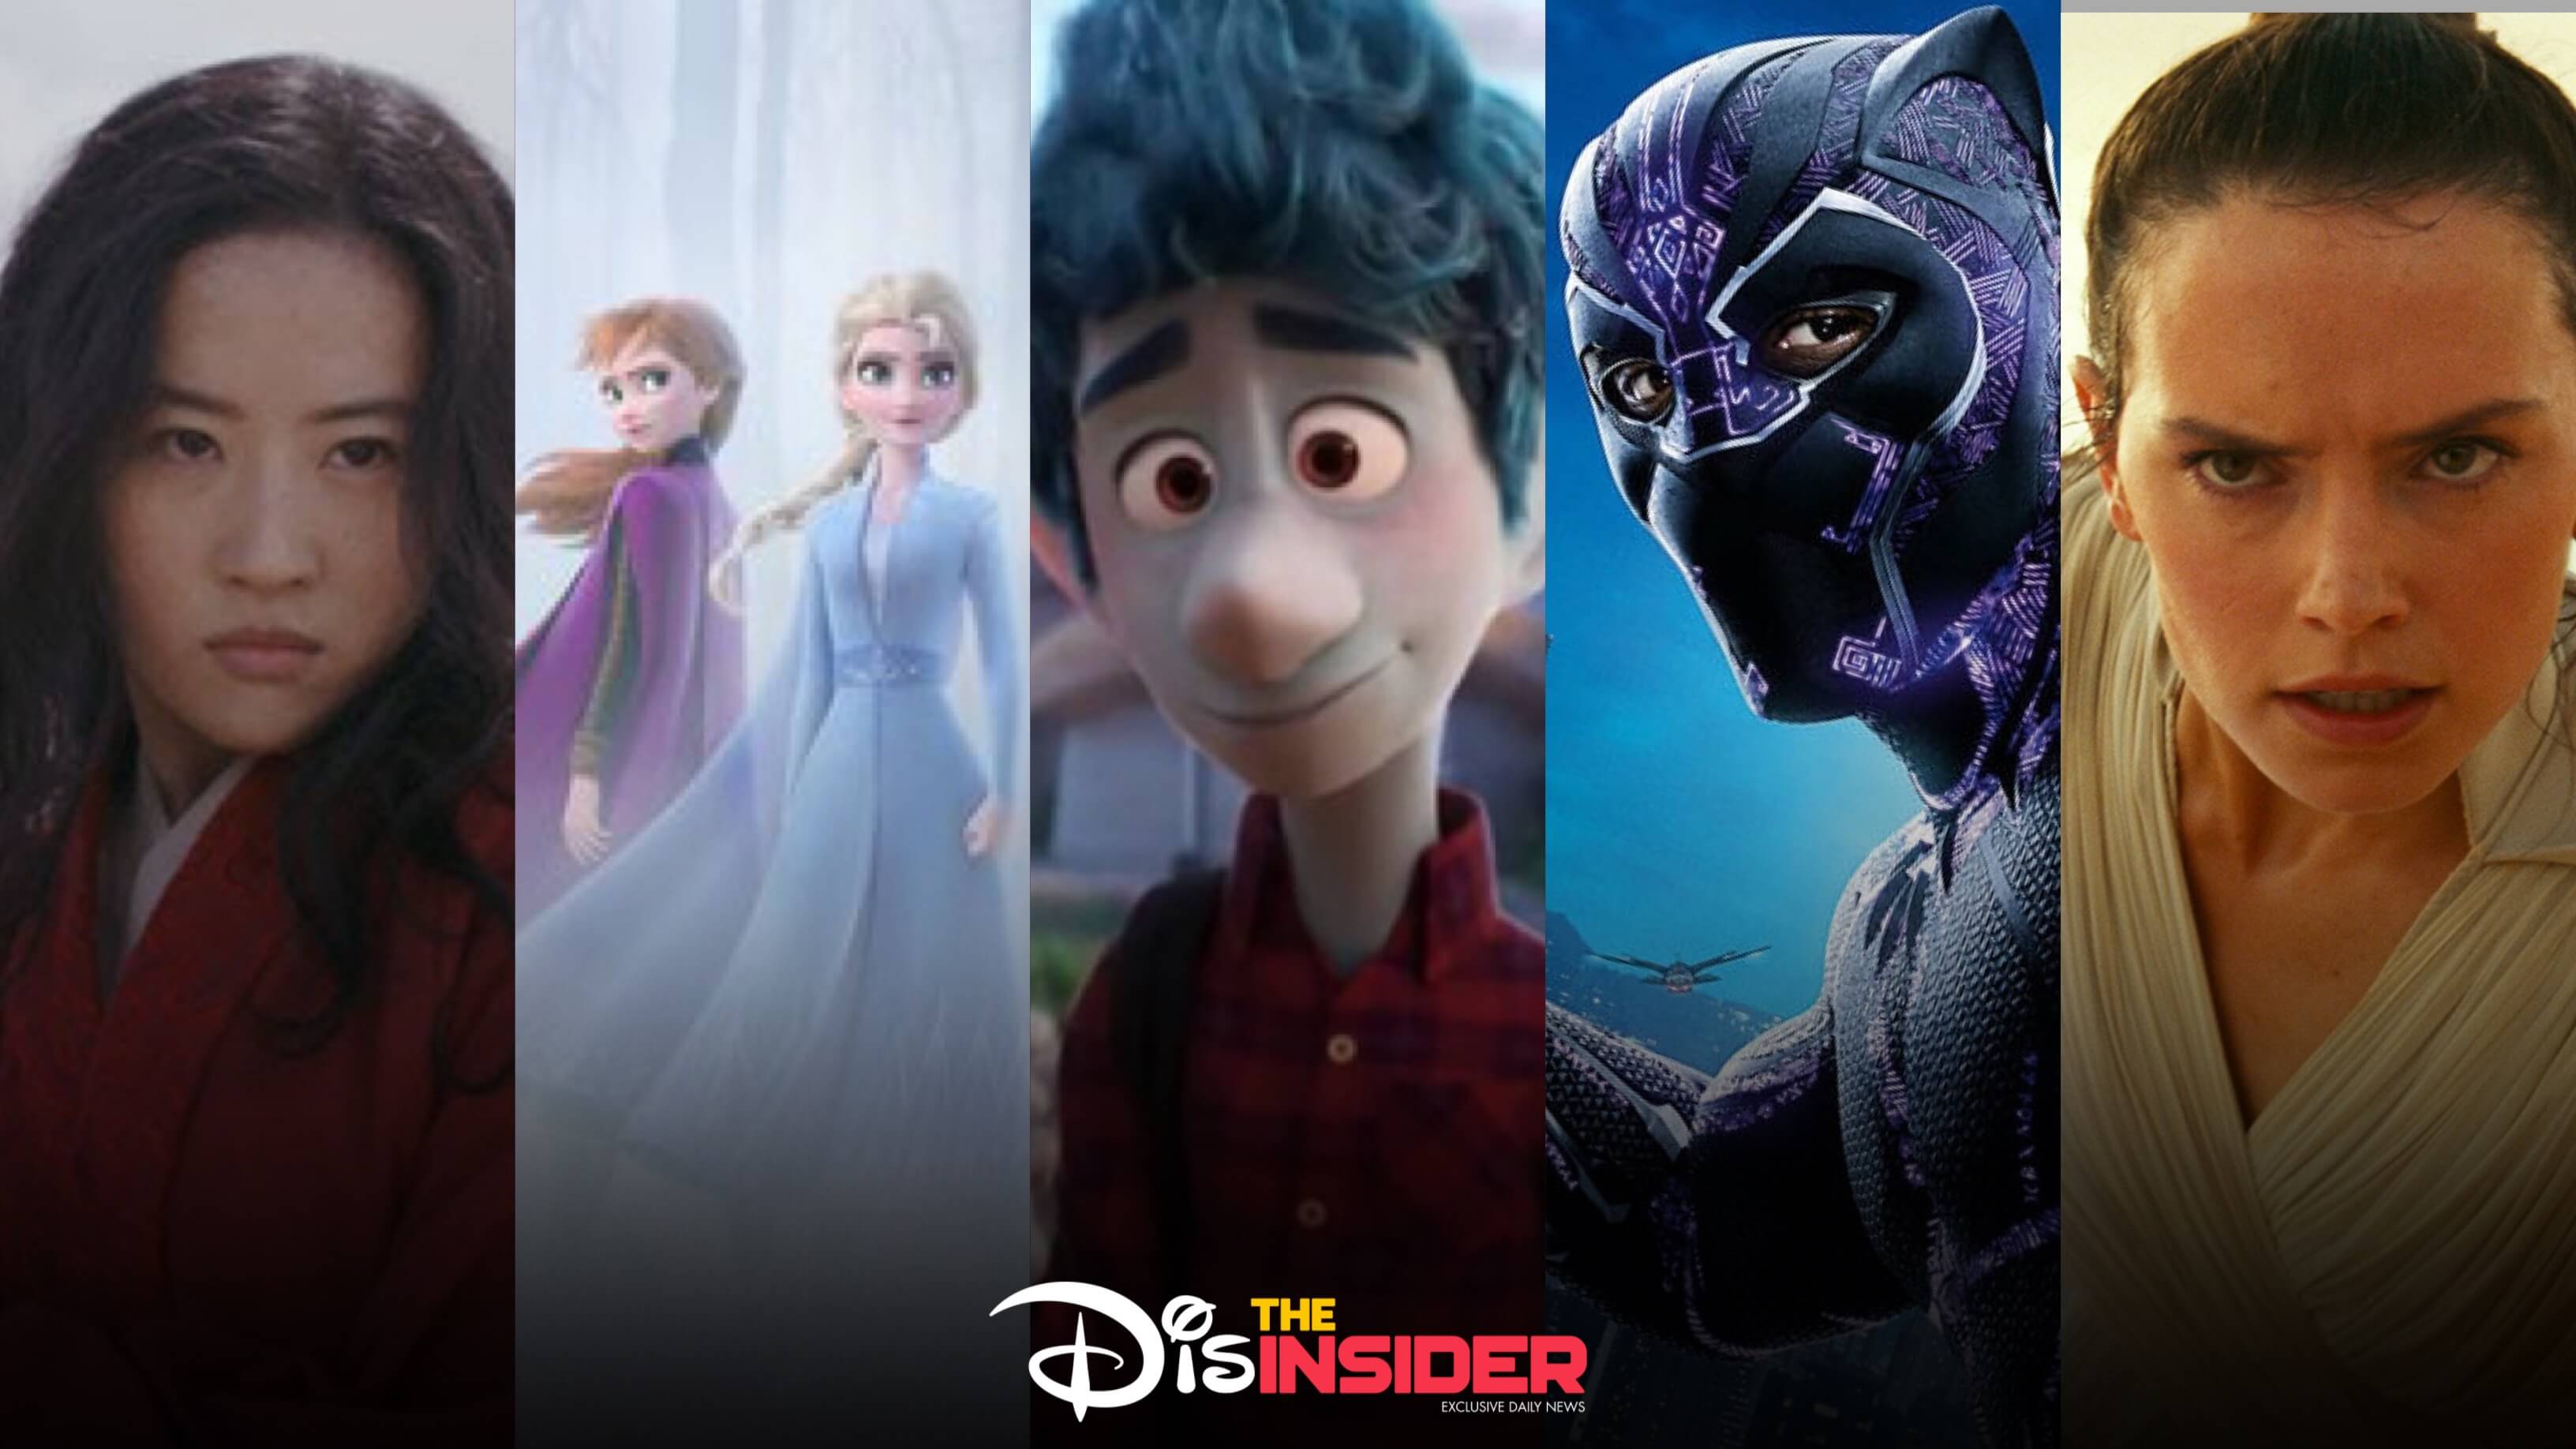 D23 Expo 2019 Disney, Pixar, Marvel, and Star Wars Movie Predictions